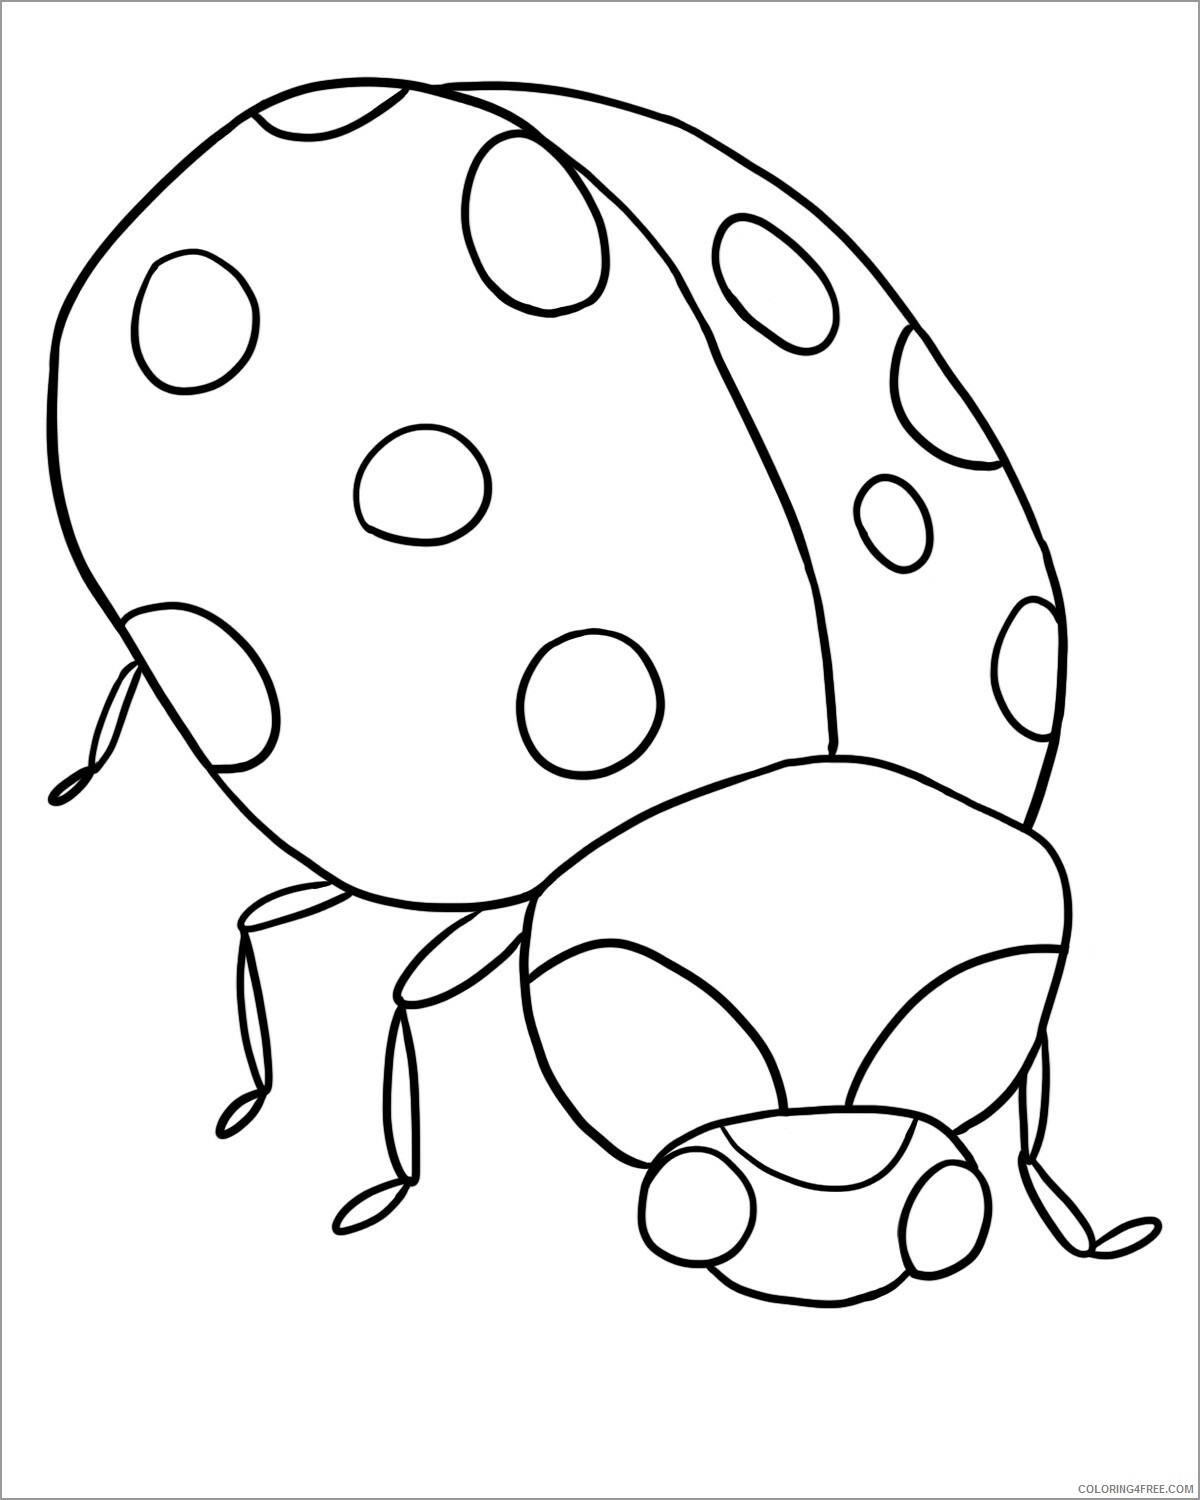 Ladybug Coloring Pages Animal Printable Sheets of a ladybug 2021 3064 Coloring4free